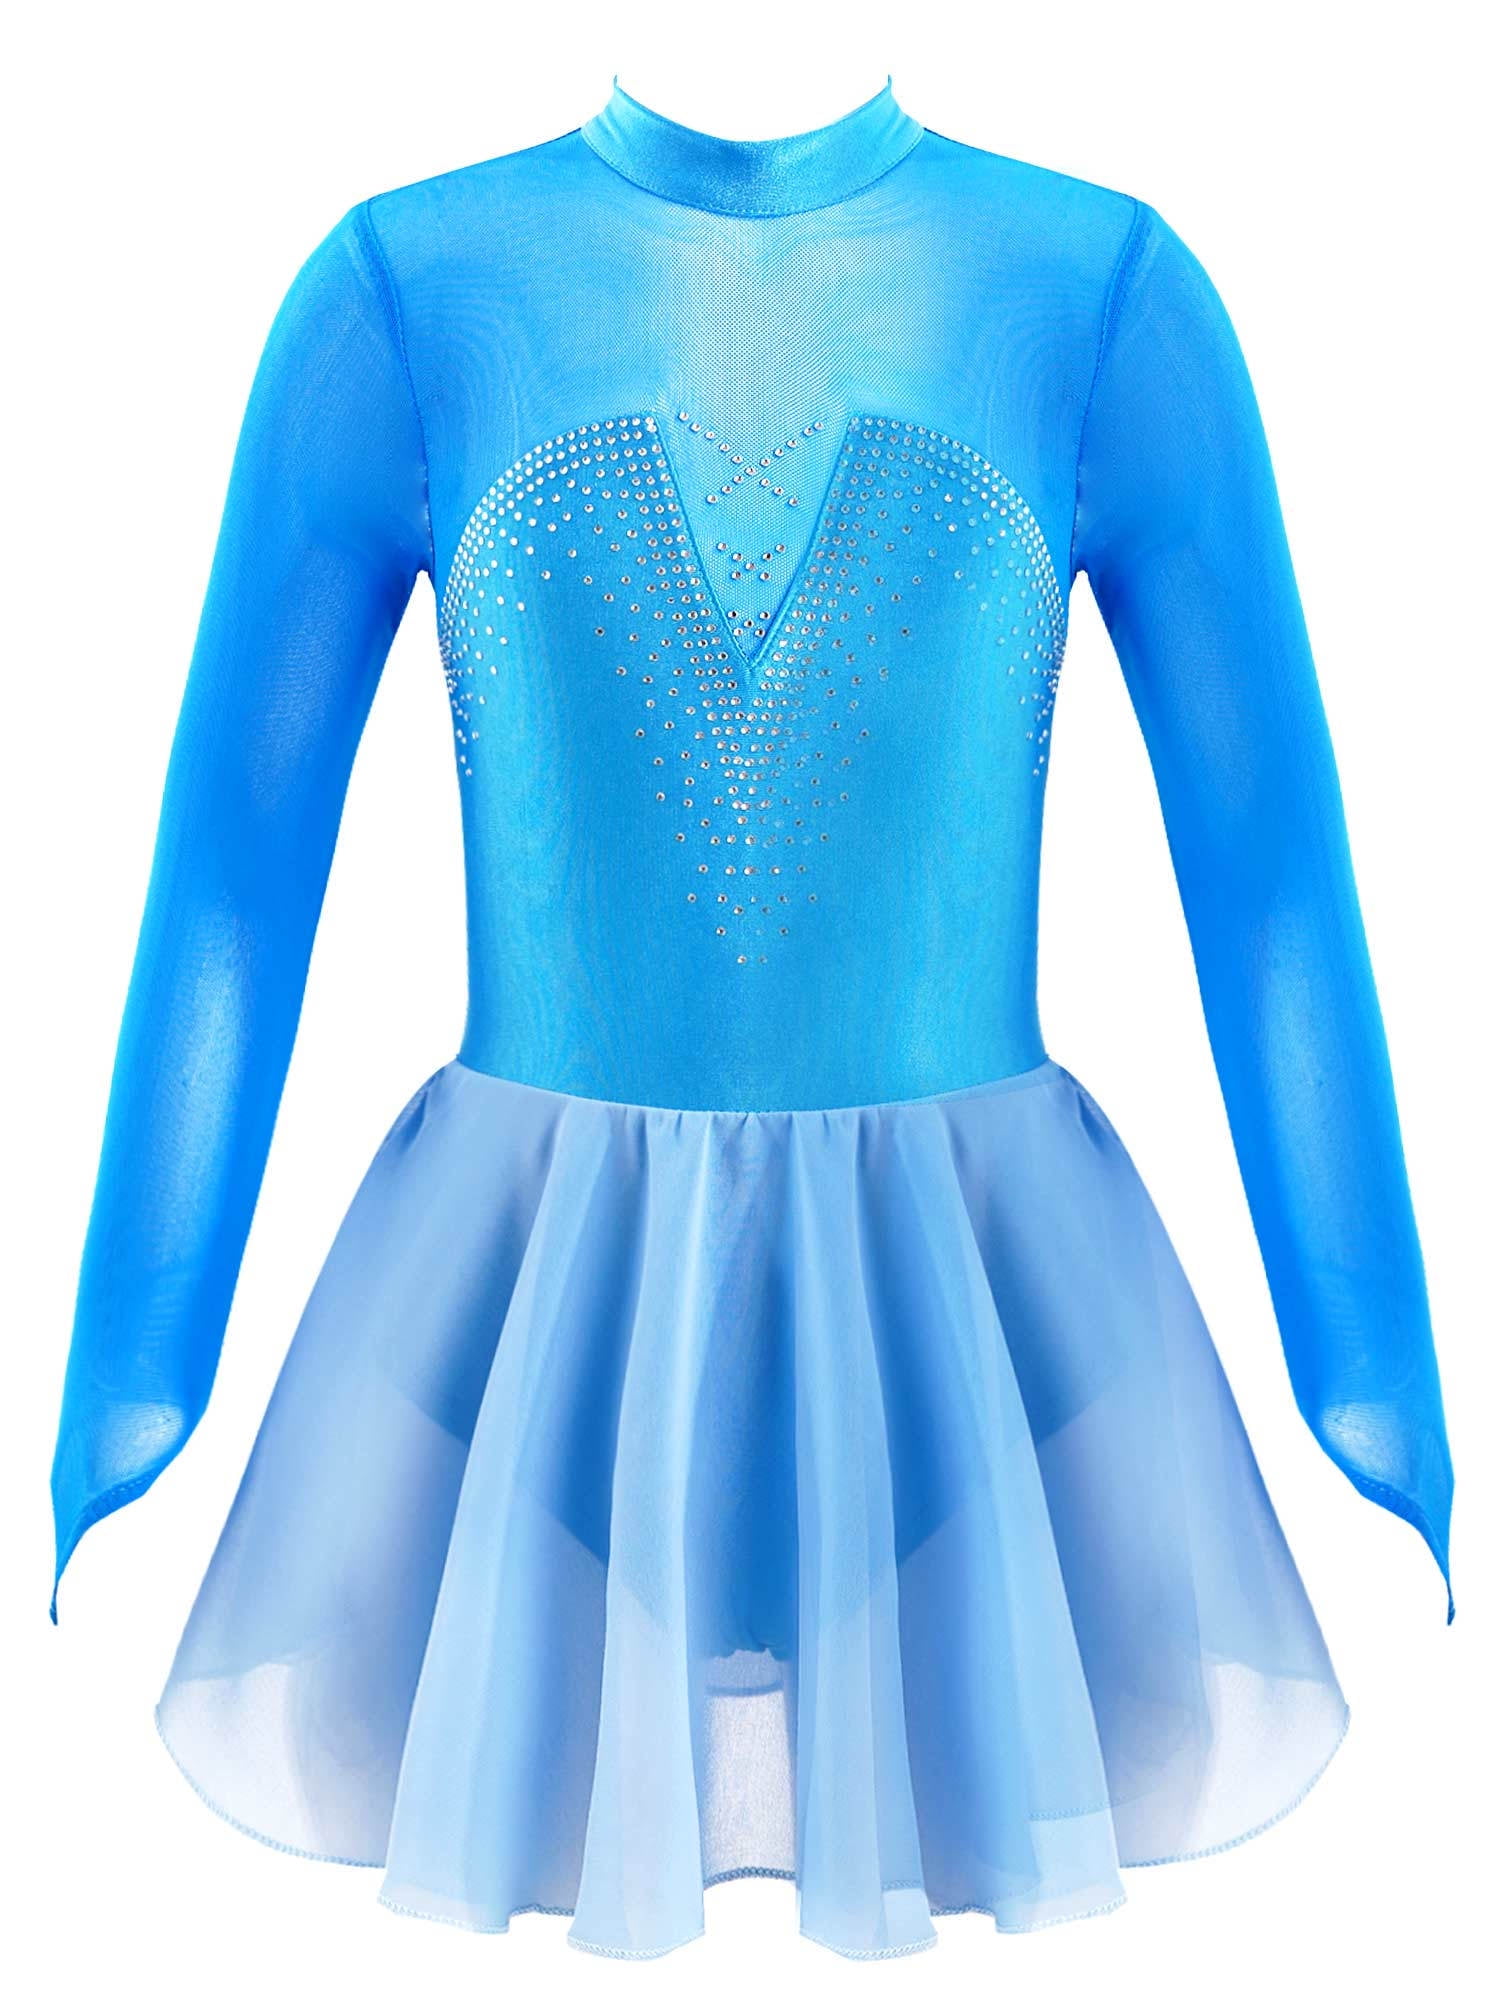 Girls Leotard Dress Sparkly Rhinestone Dancewear Tulle Skating Ballet Dance Suit 